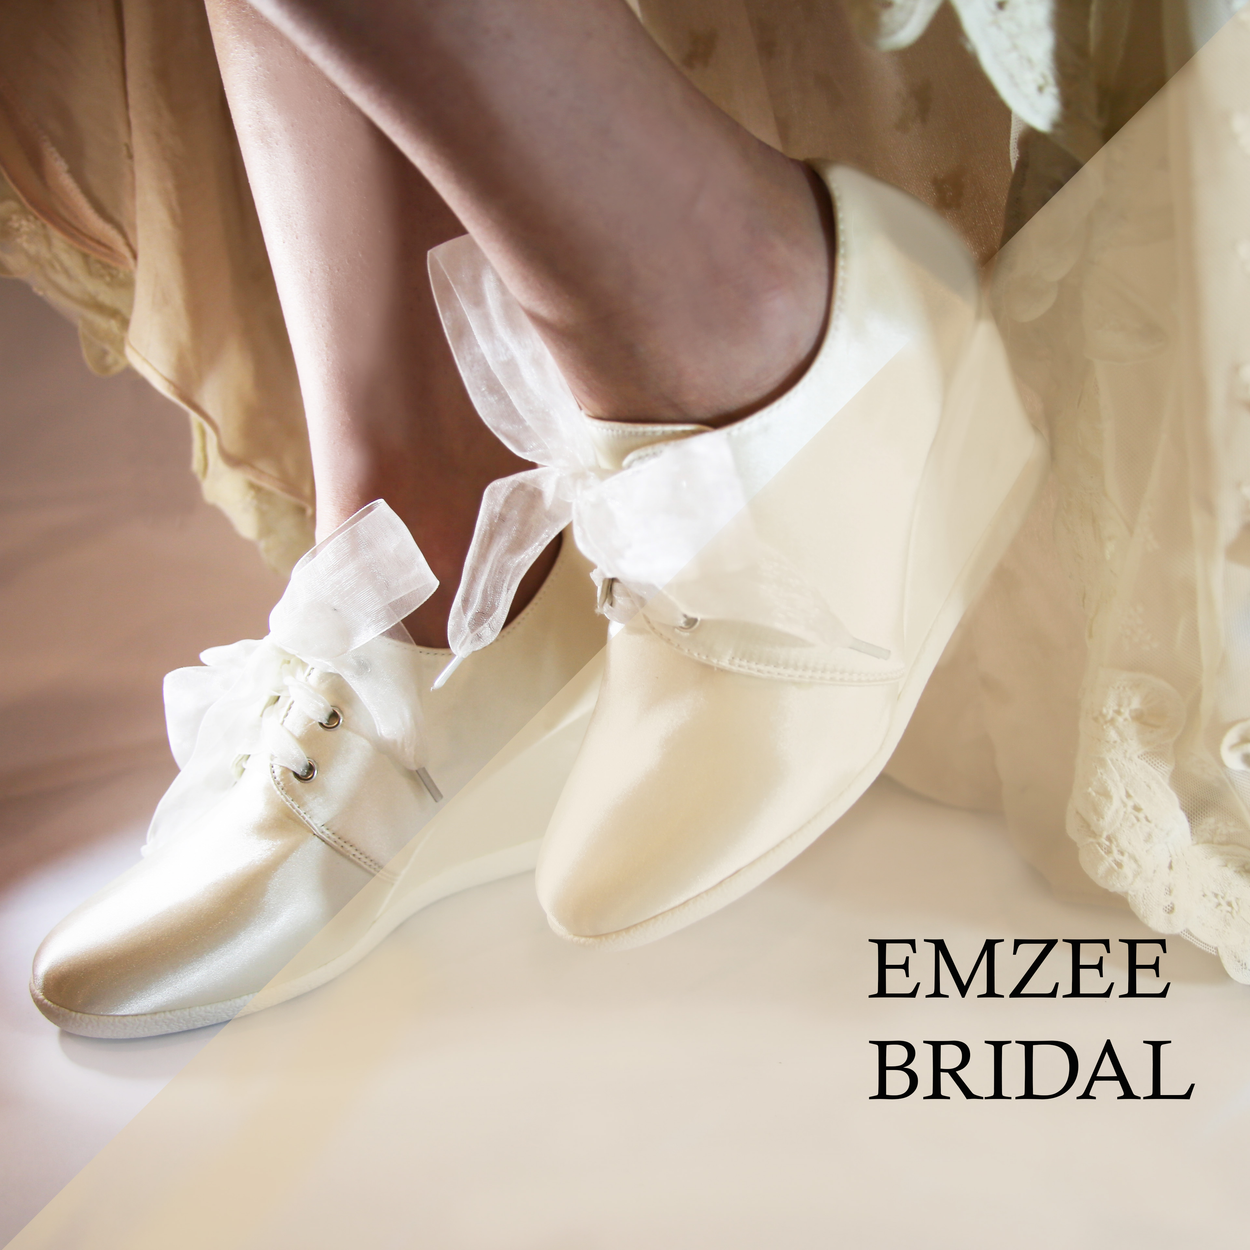 Emzee Bridal